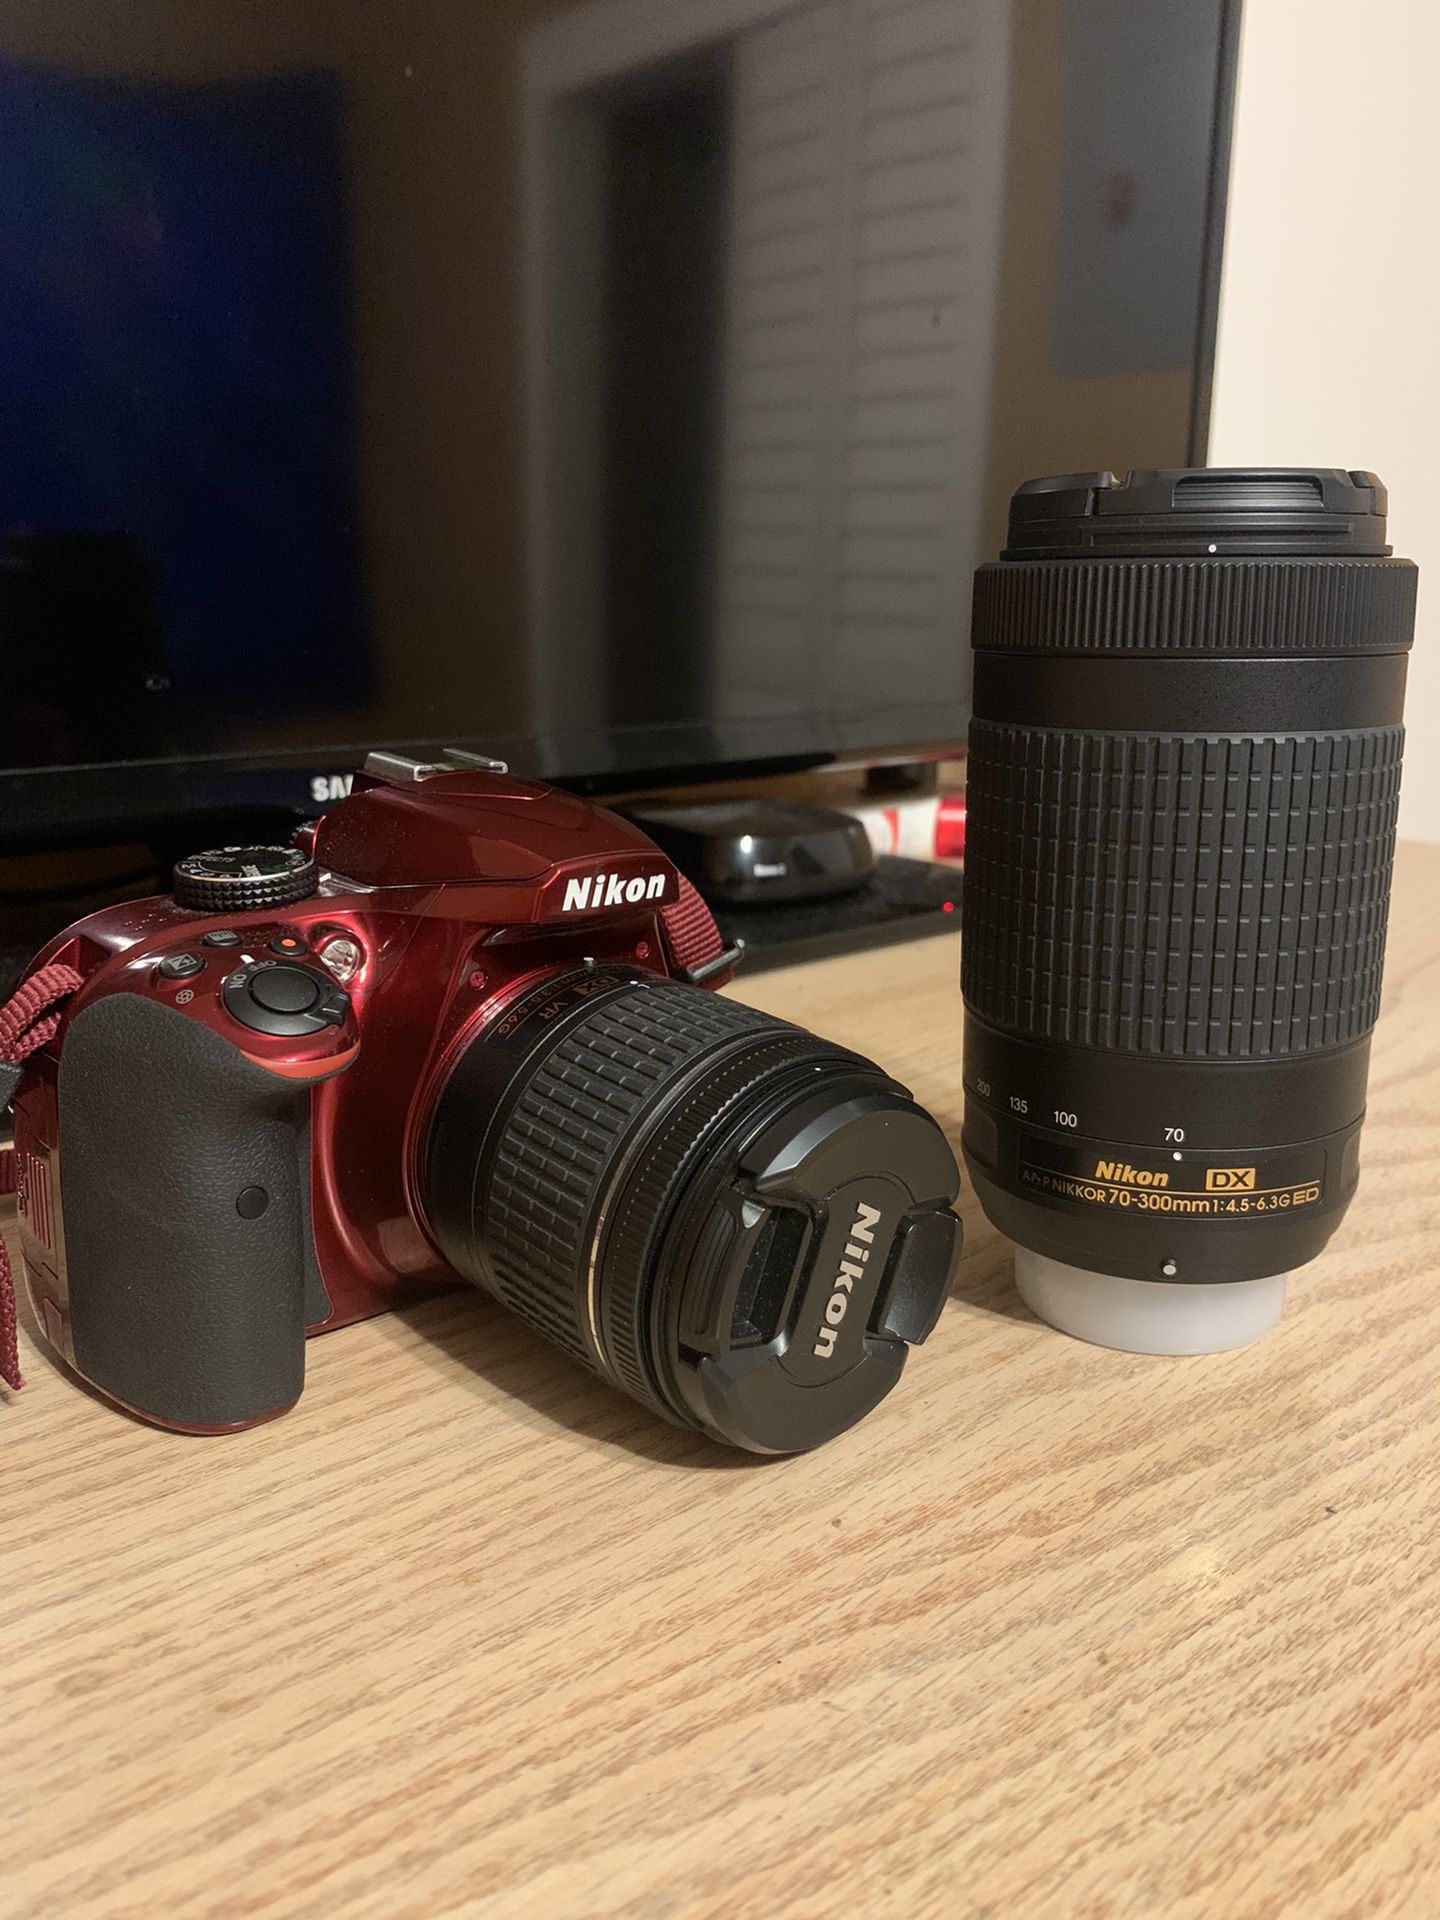 Nikon D3400 (red)